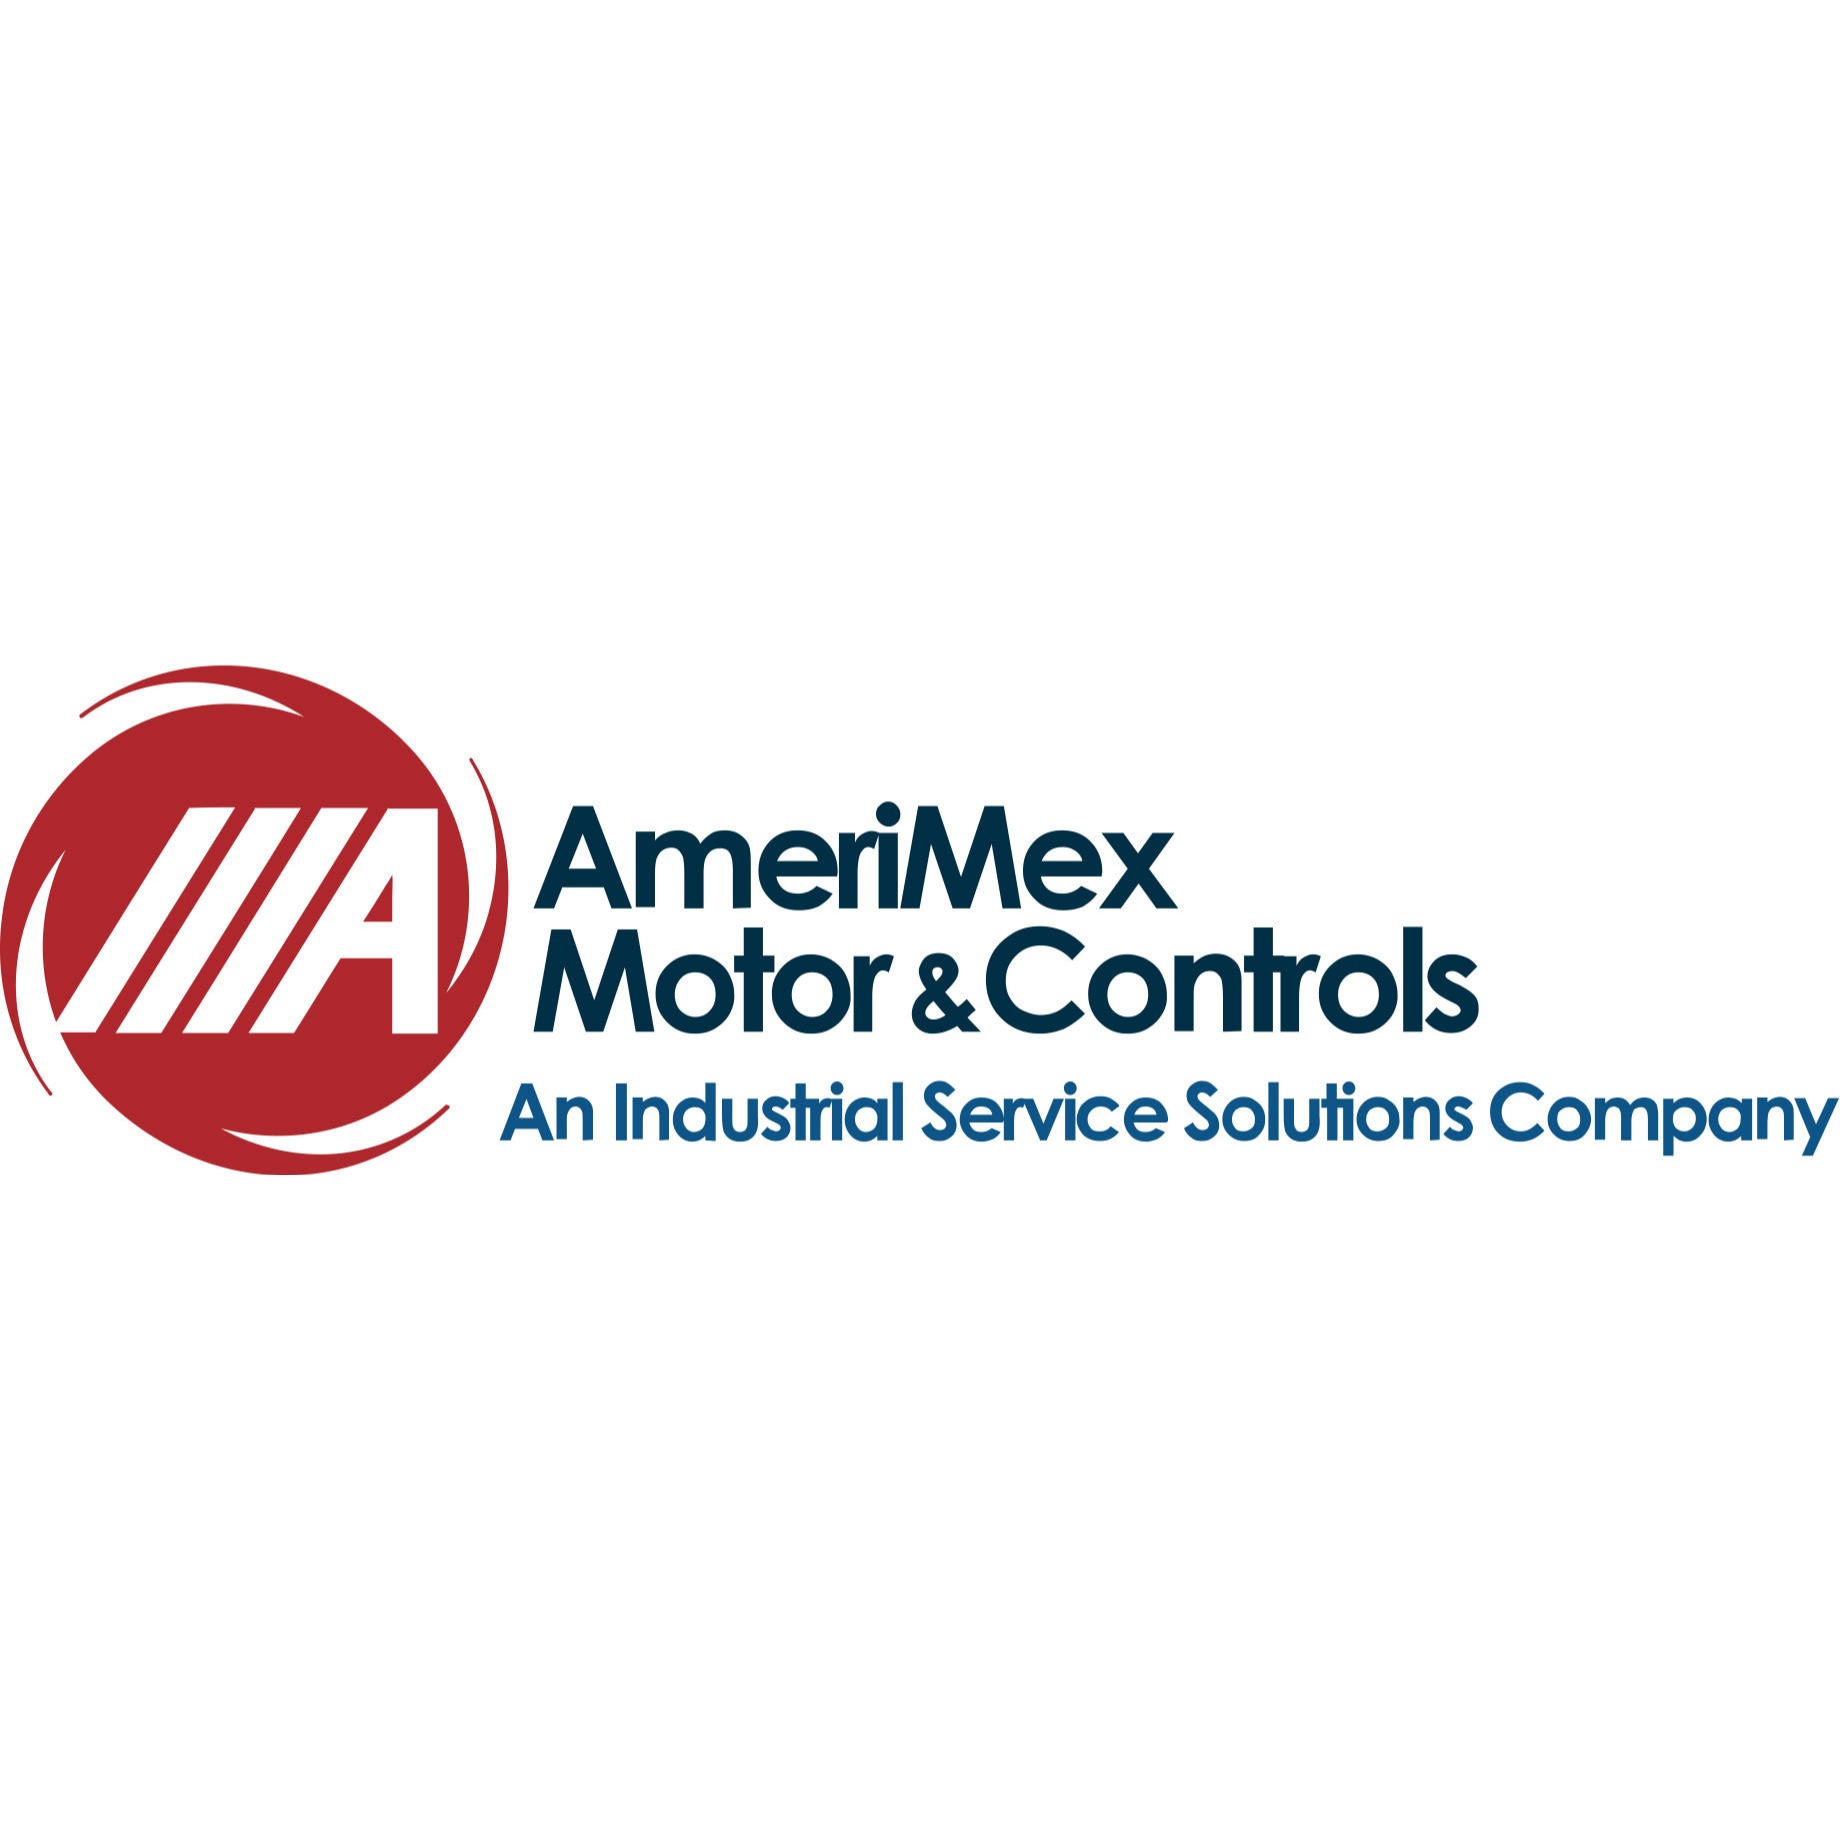 AmeriMex Motor & Controls